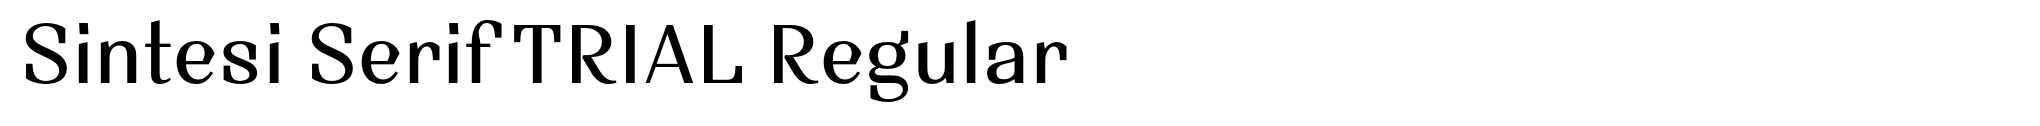 Sintesi Serif TRIAL Regular image